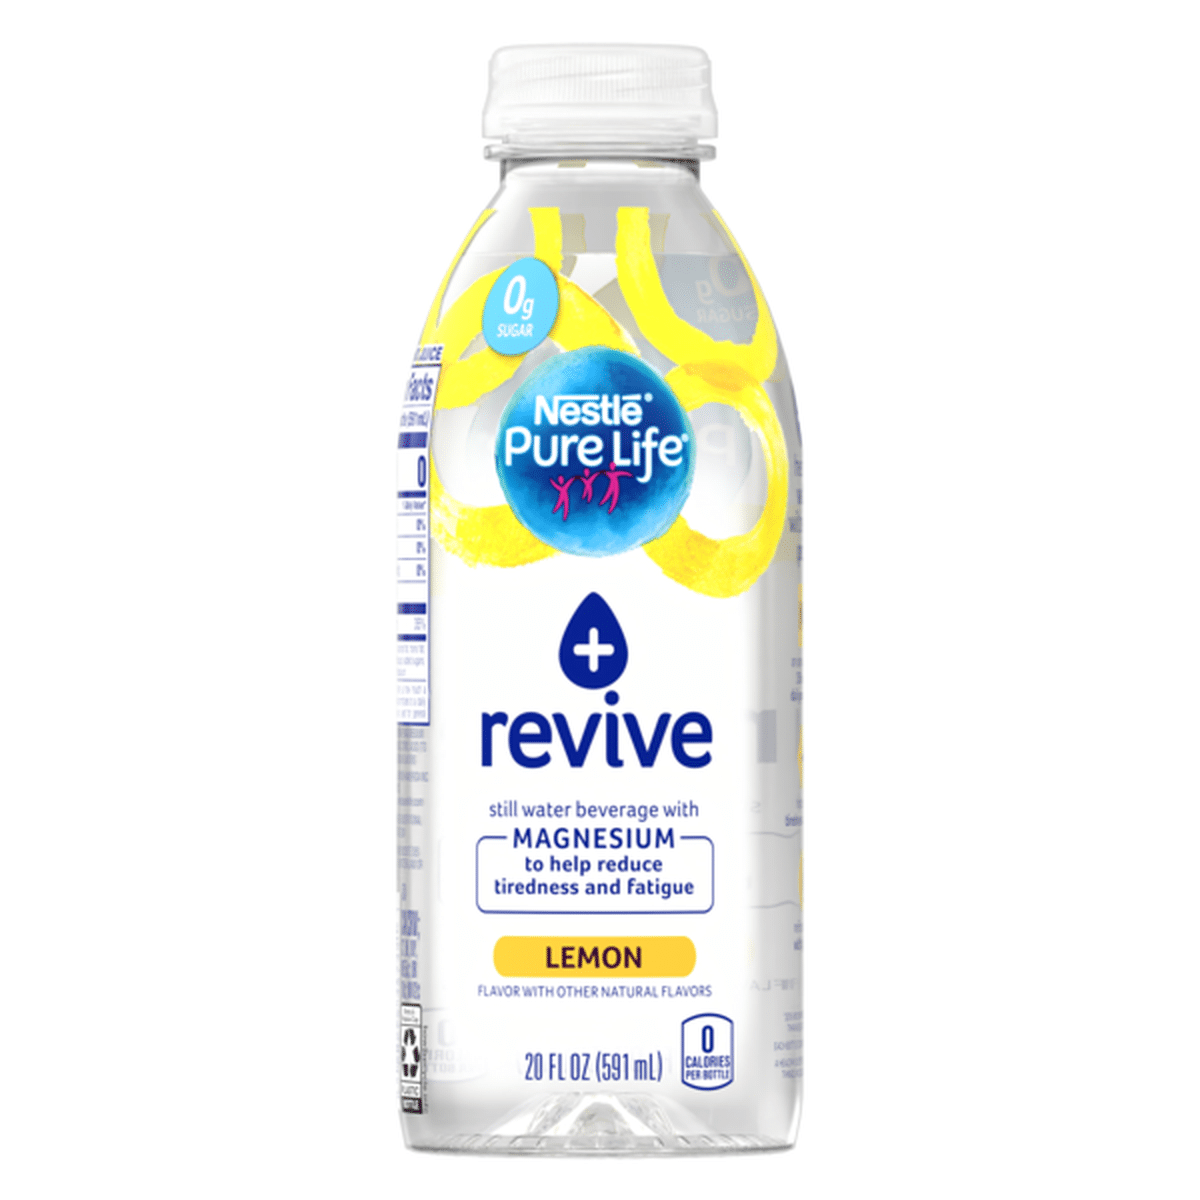 Pure Life + revive with Magnesium (lemon flavor) 20 Fl. Oz. (4 Pack)